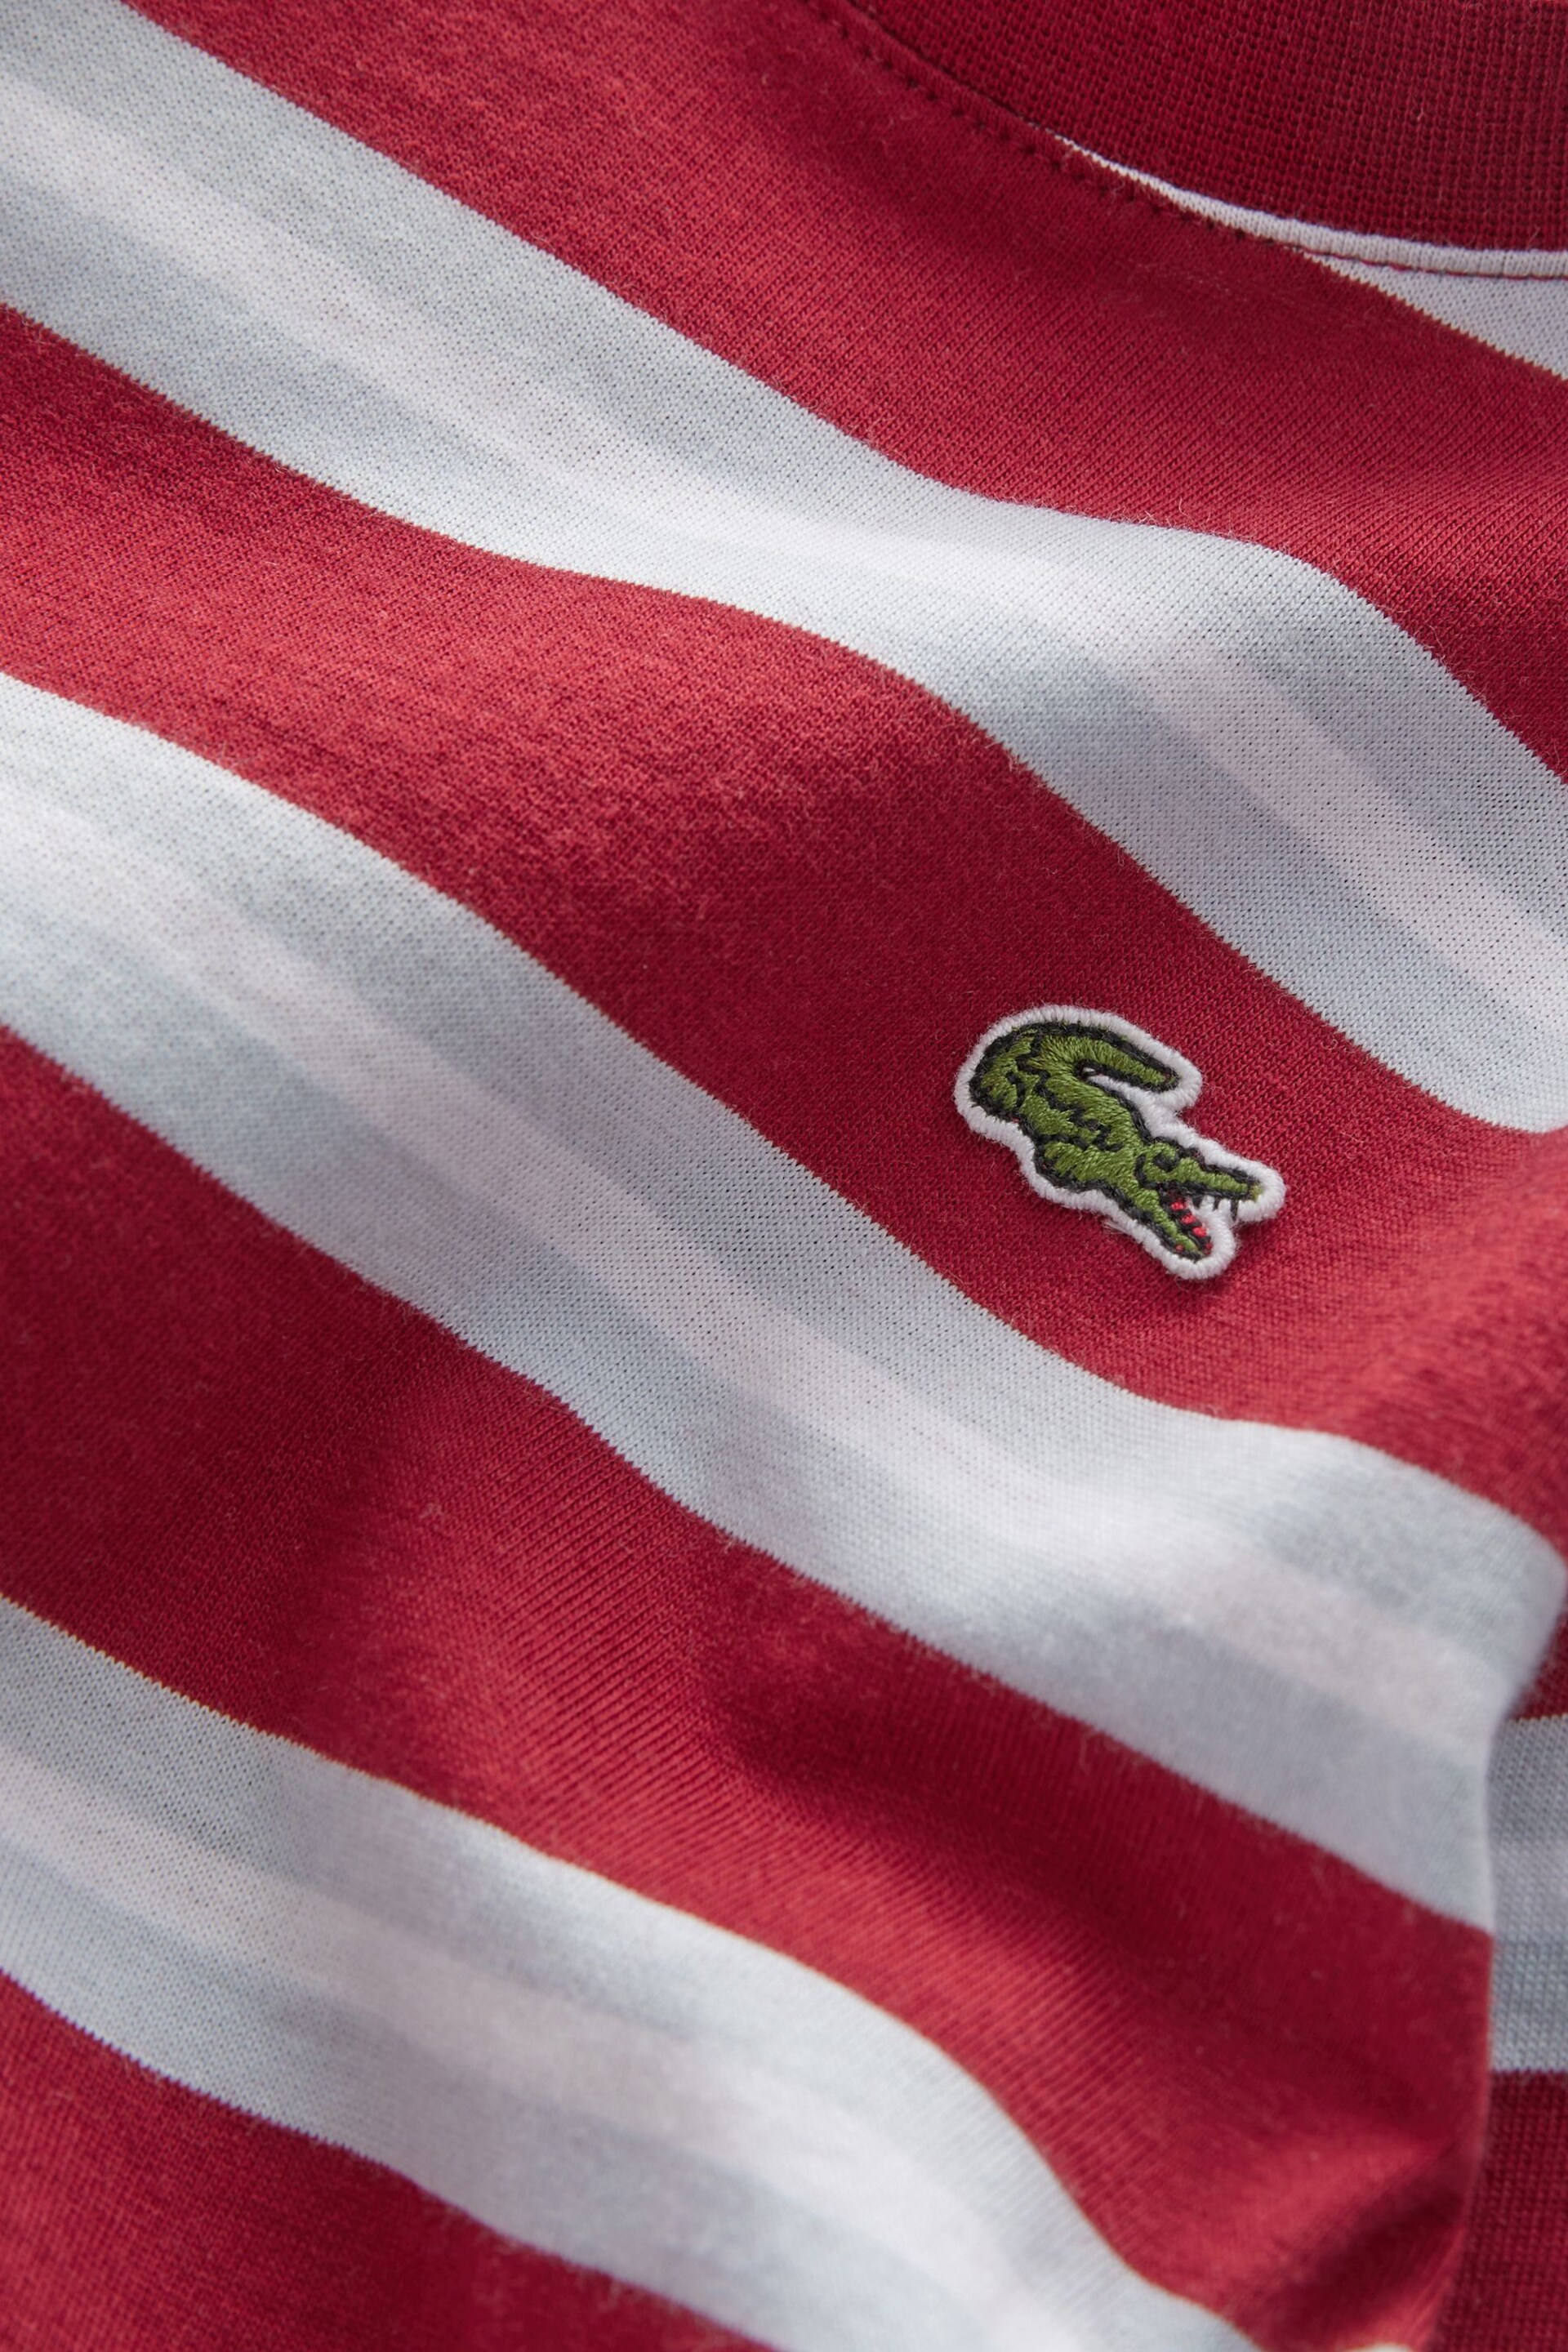 Lacoste Children's Stripe T-Shirt - Image 3 of 3